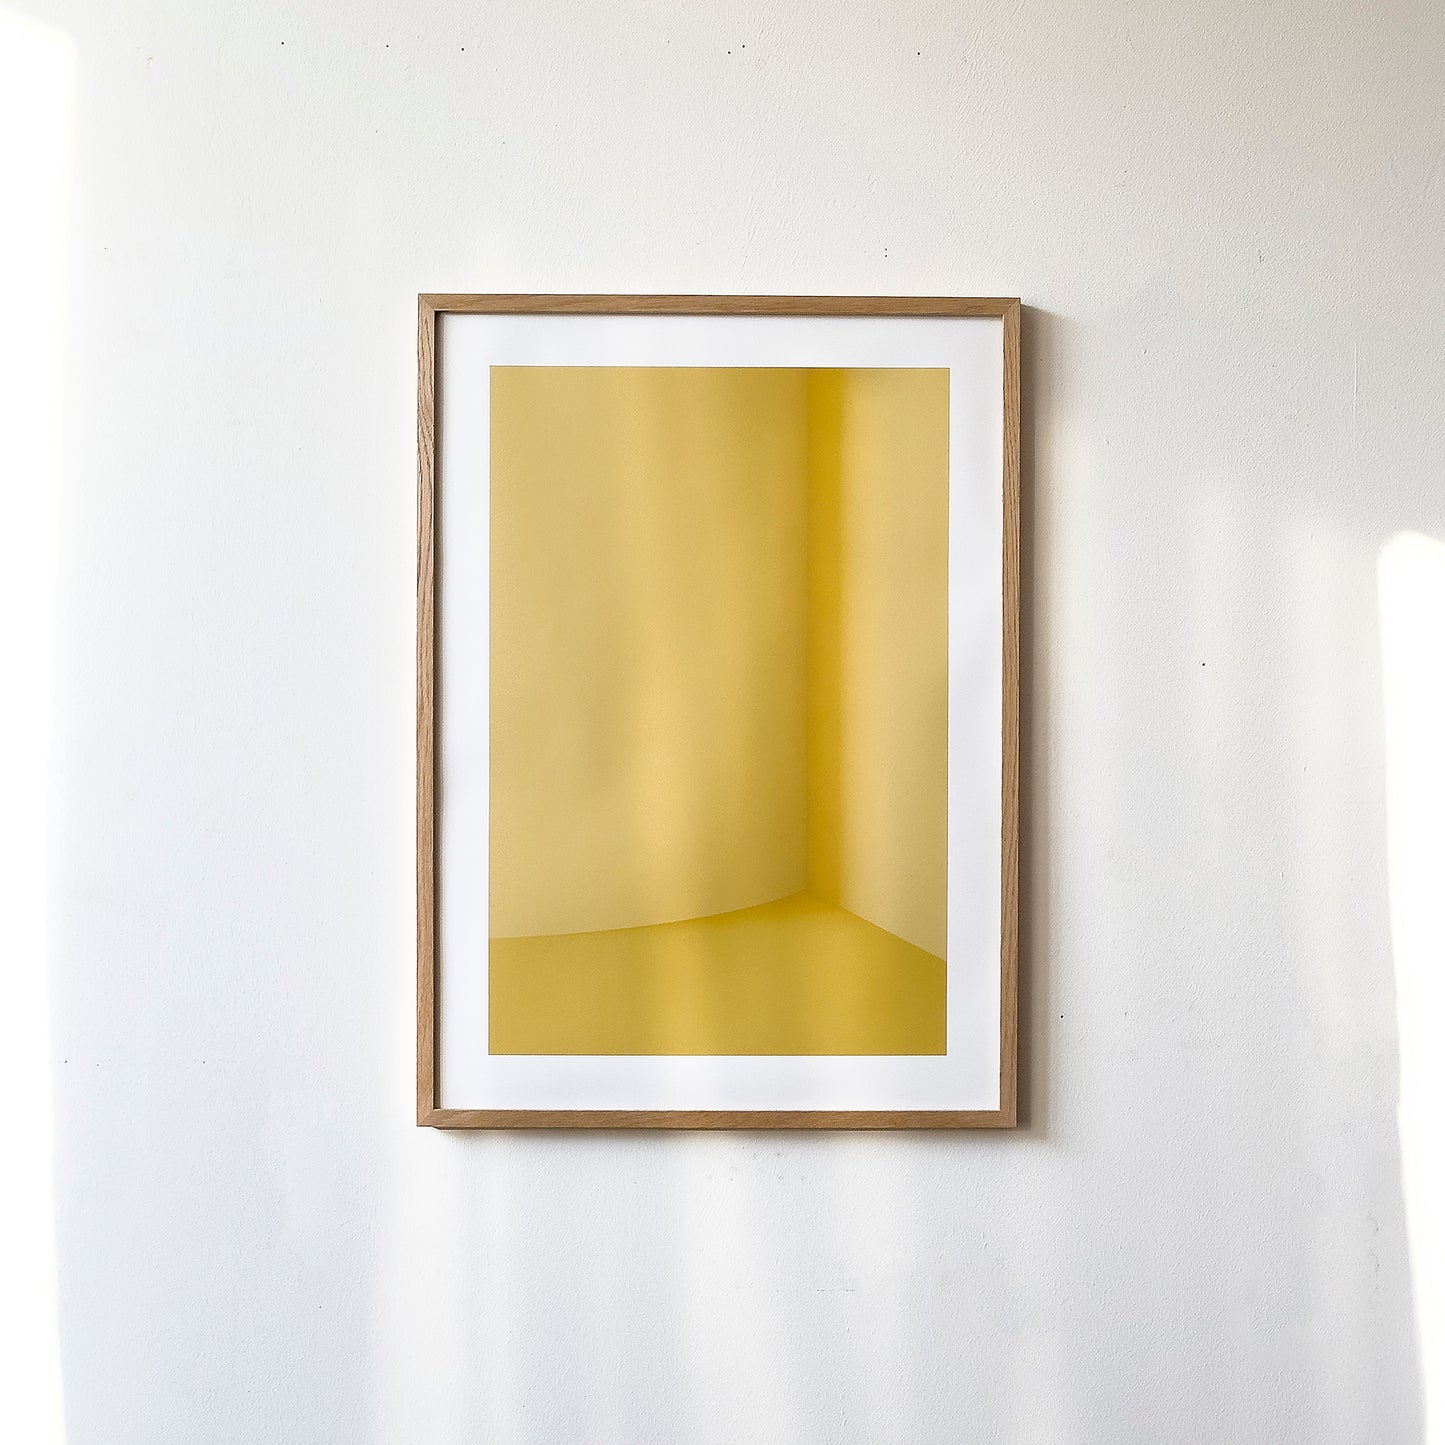 Kunstdruck im Bilderrahmen, Motiv gelb monochrome Raumecke, Titel Styr II